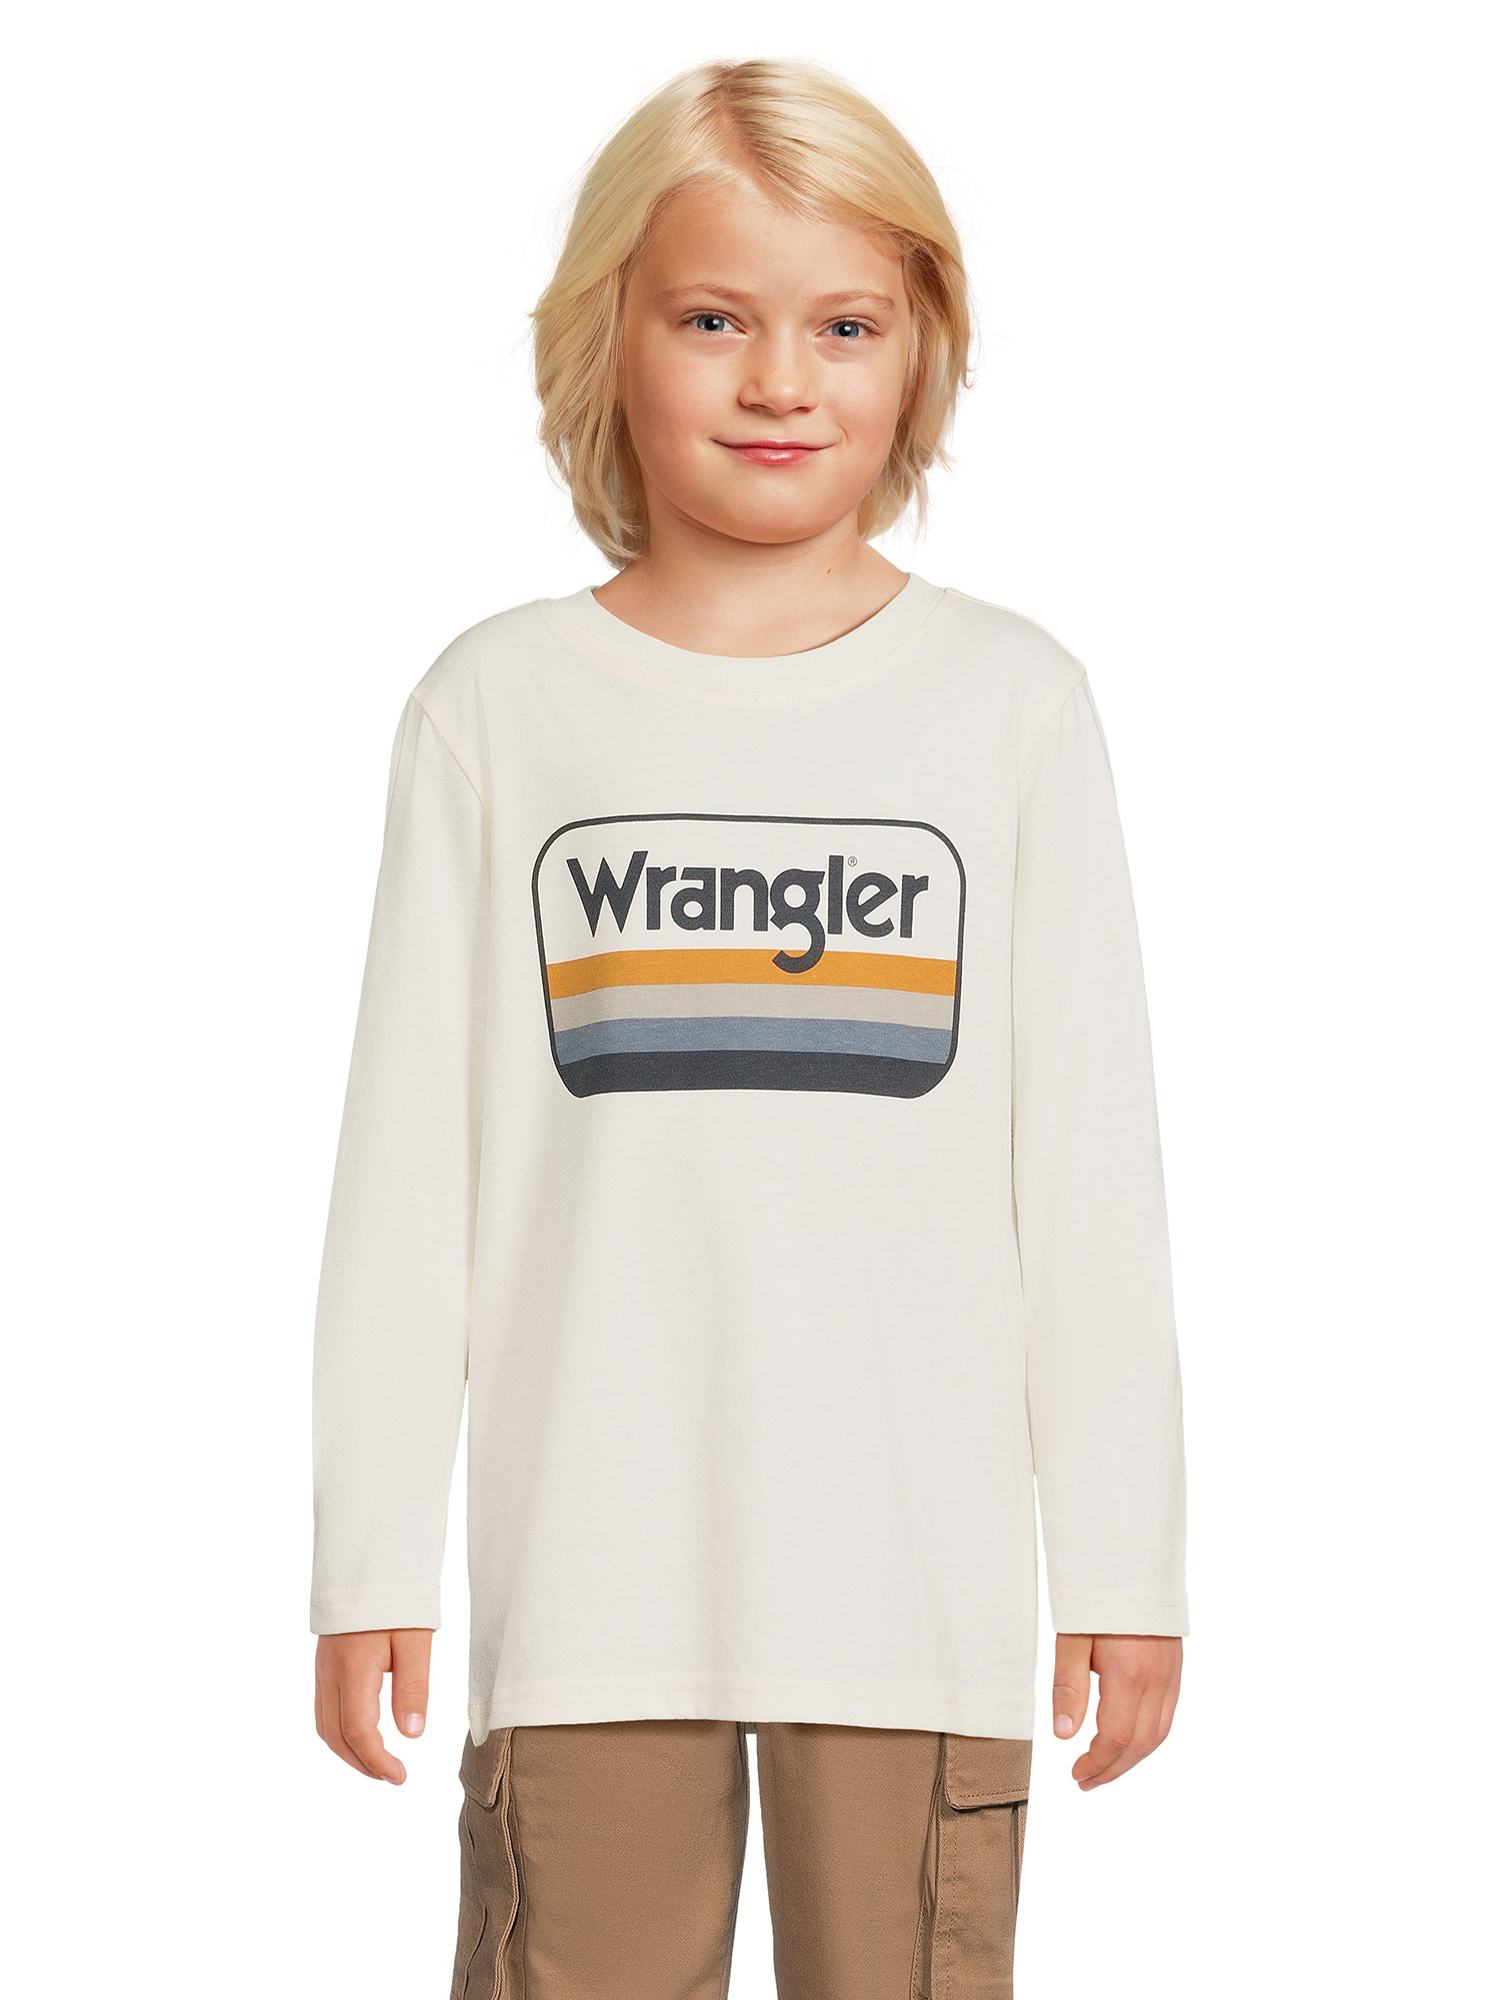 Wrangler Boys Long Sleeve Raglan and Graphic Tee, 2-Pack, Sizes 4-18 & Husky - image 2 of 5